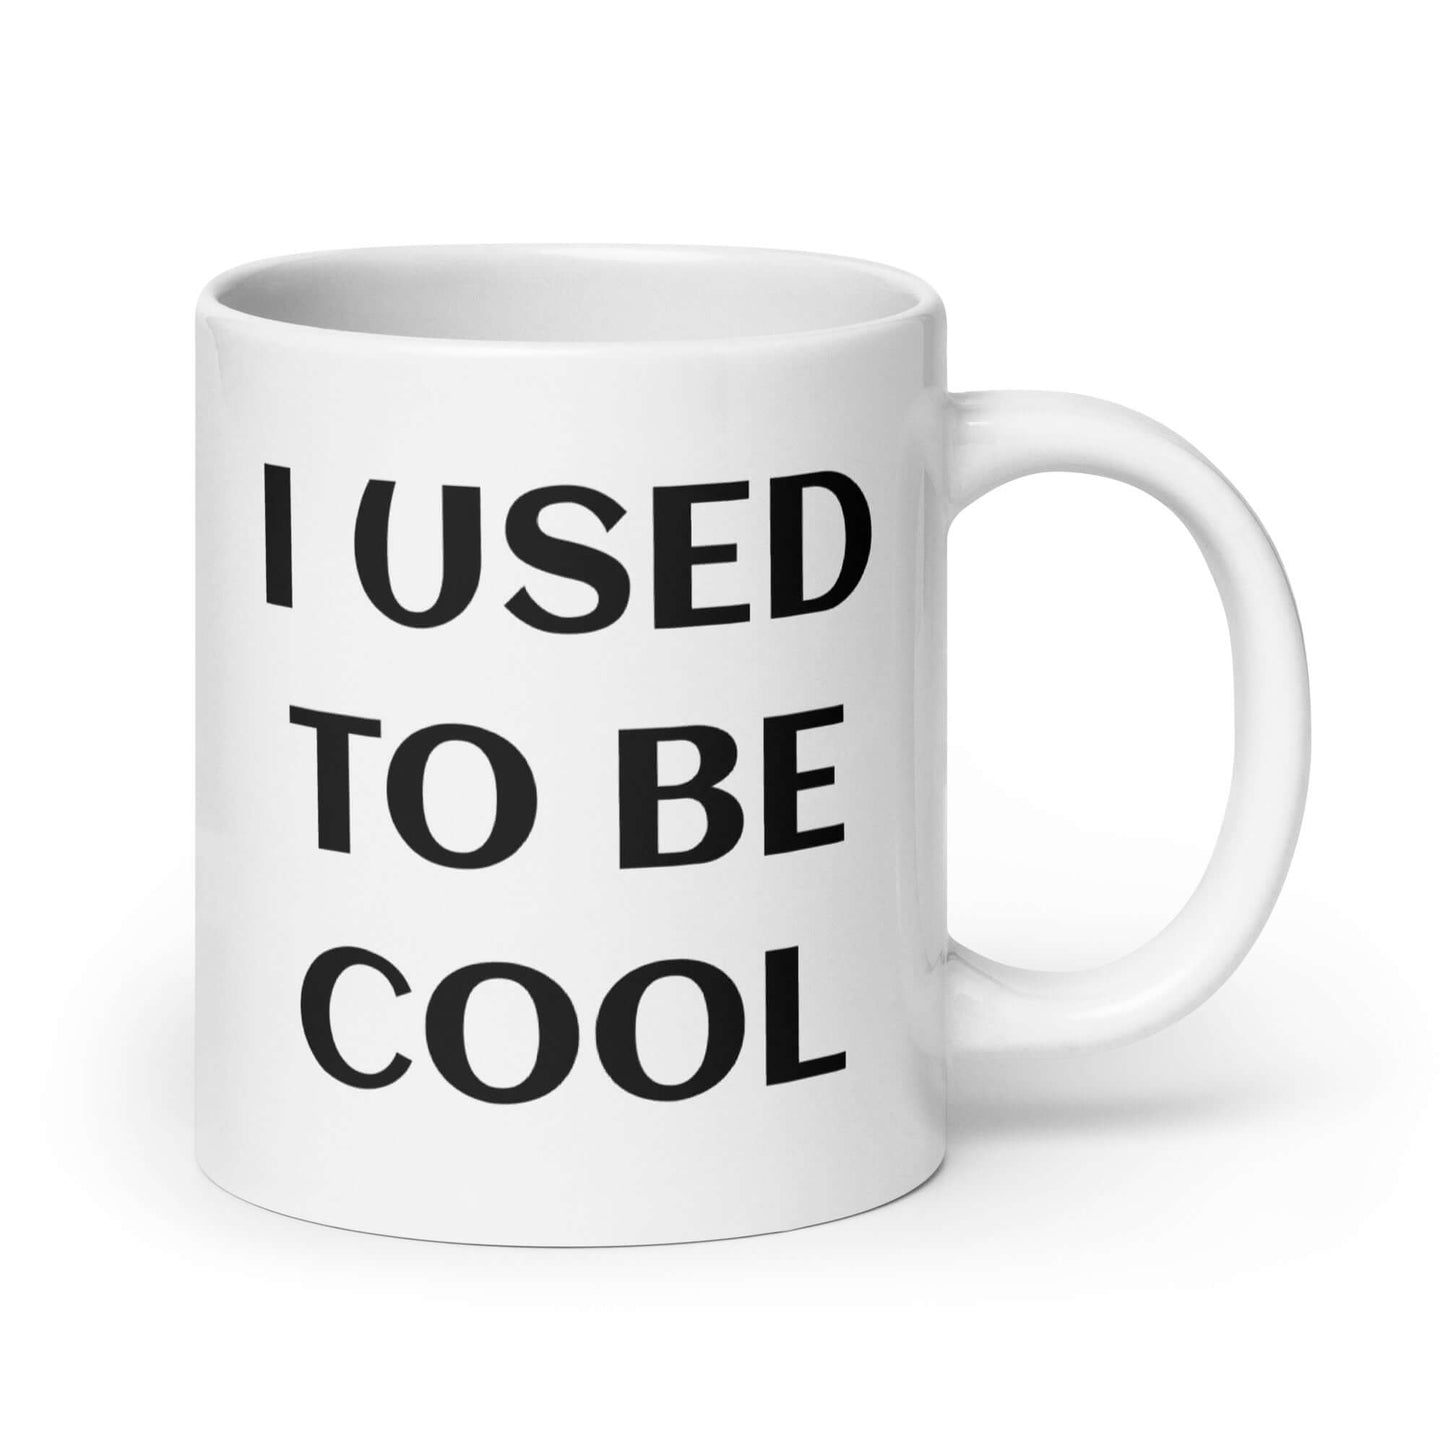 I used to be cool coffee mug